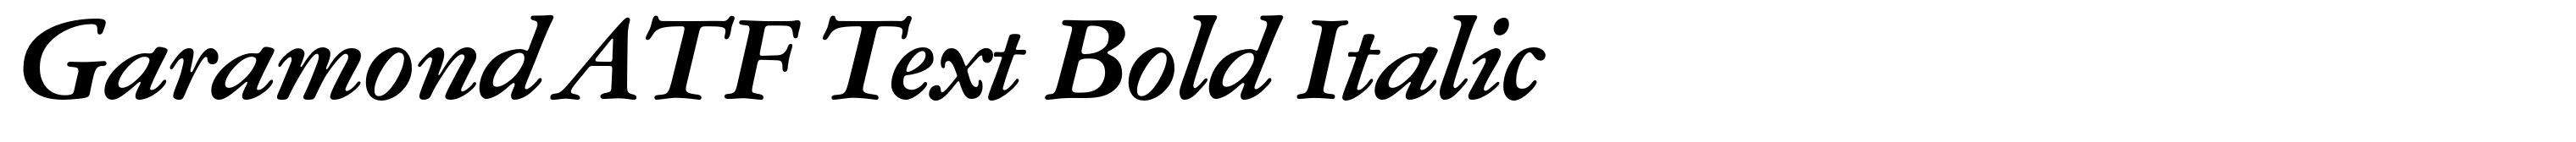 Garamond ATF Text Bold Italic